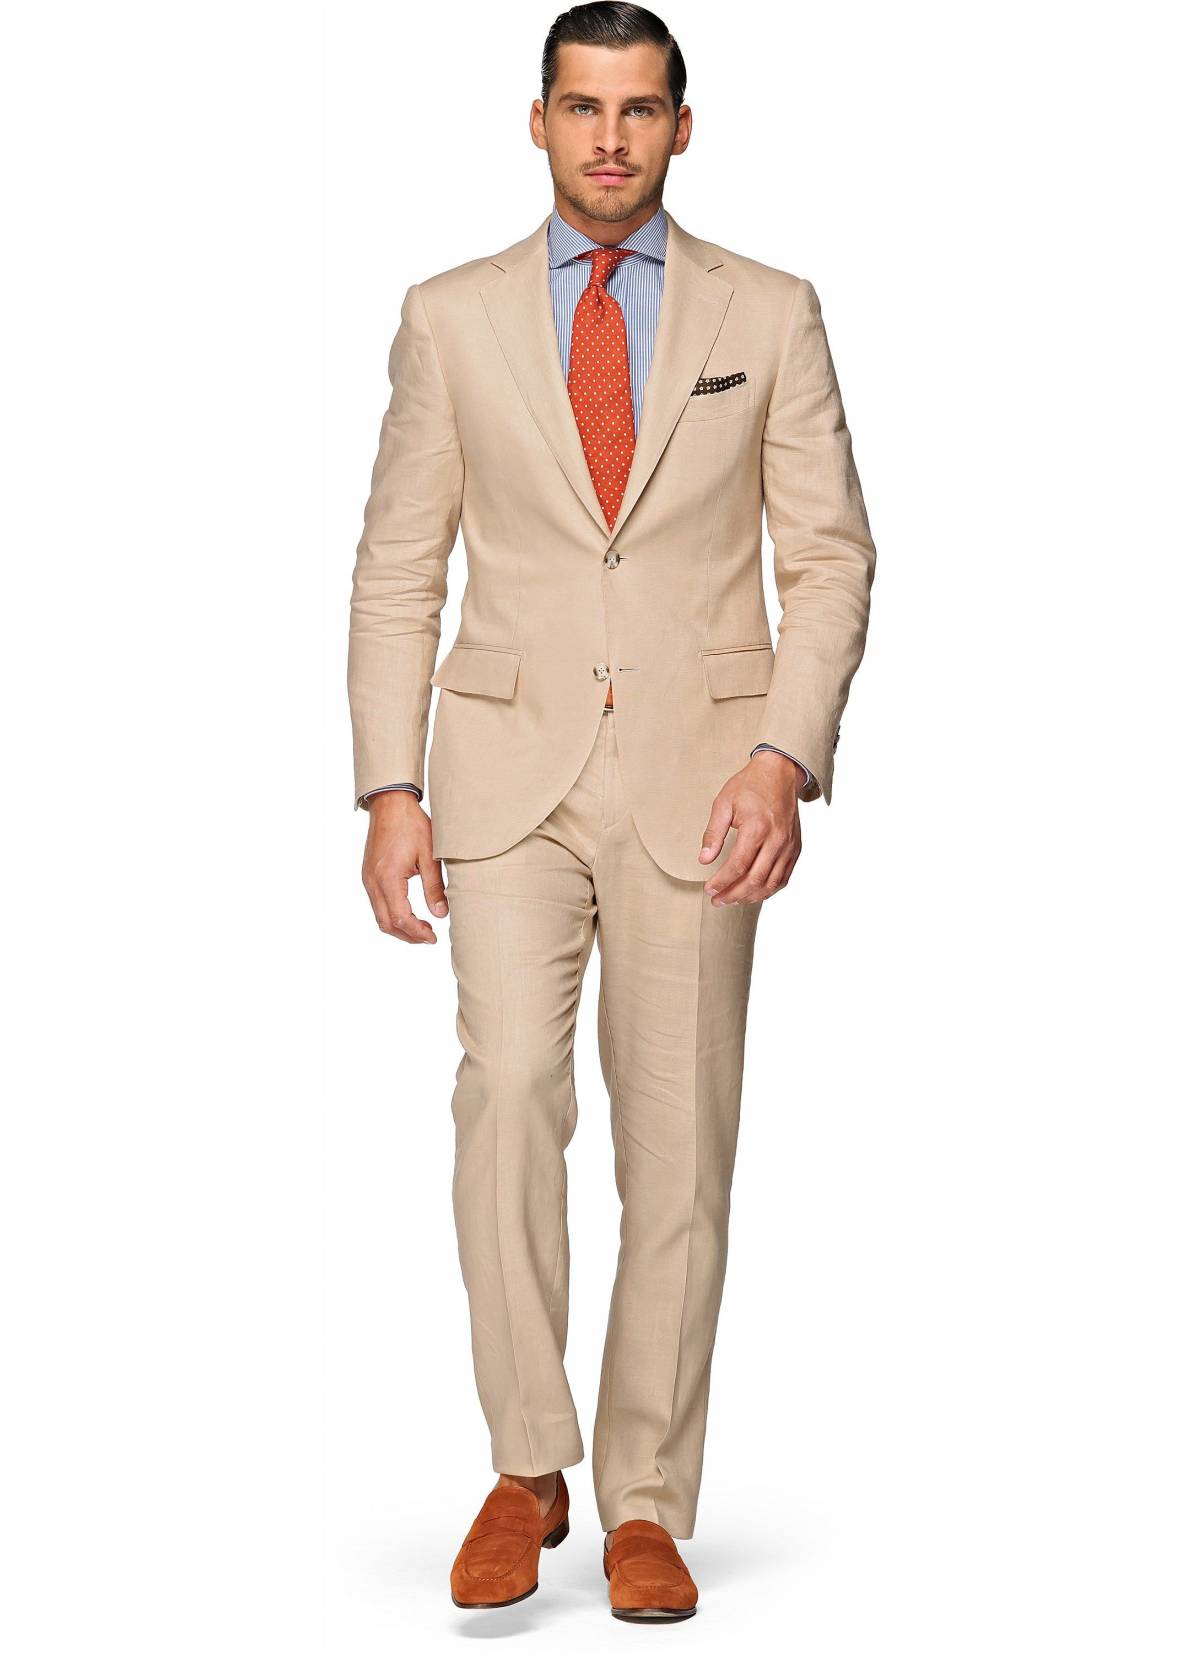 50 Ways To Wear The Khaki Suit - Modern 